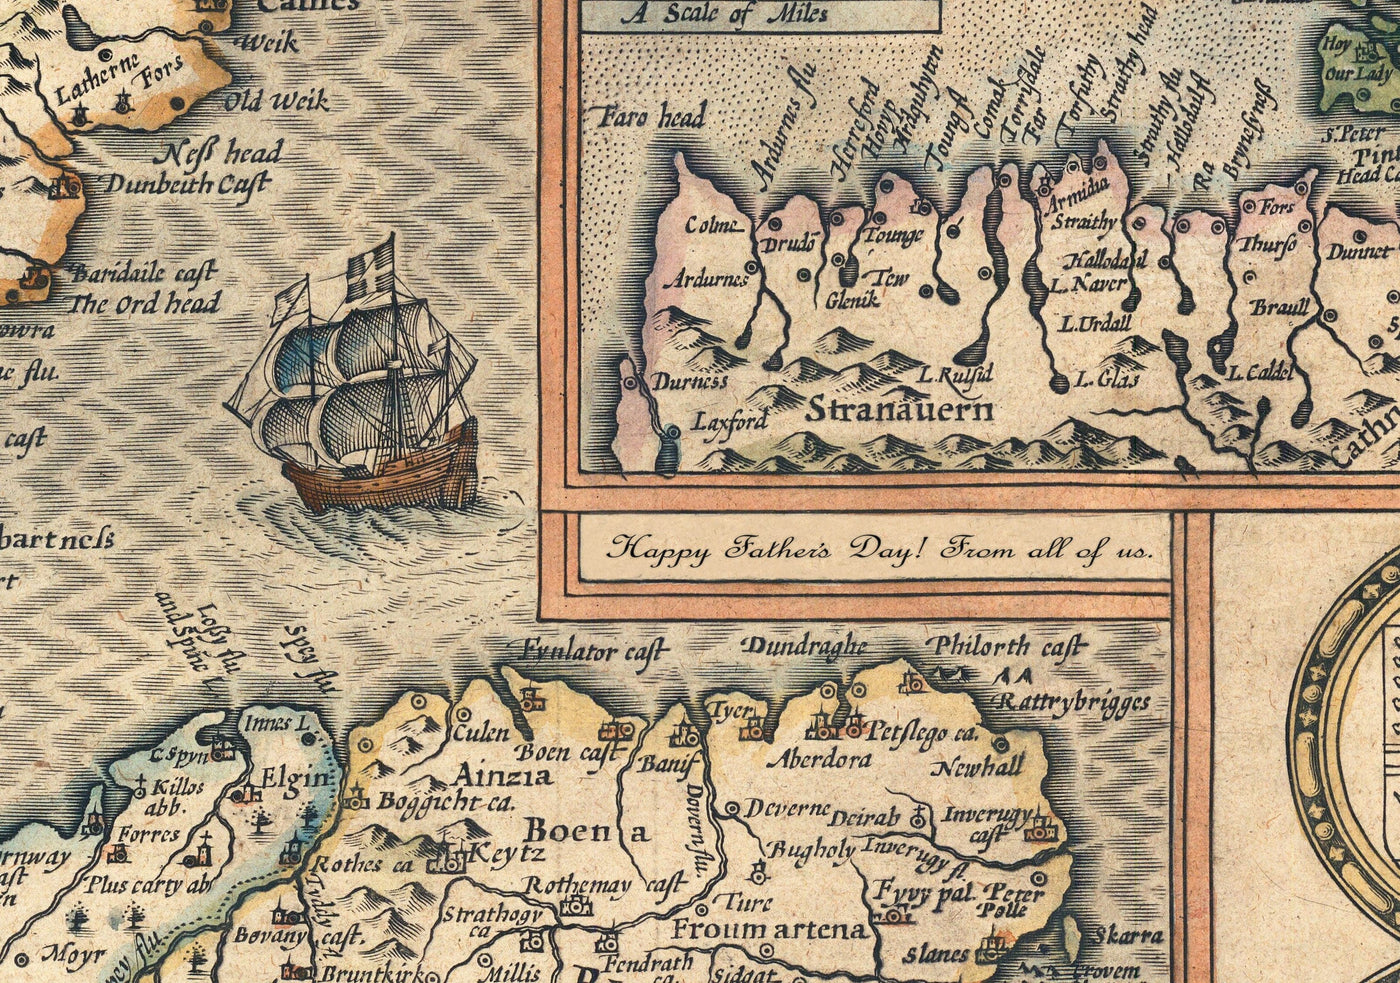 Old Map of West Yorkshire, 1611 by John Speed - York, Bradford, Sheffield, Leeds, Huddersfield